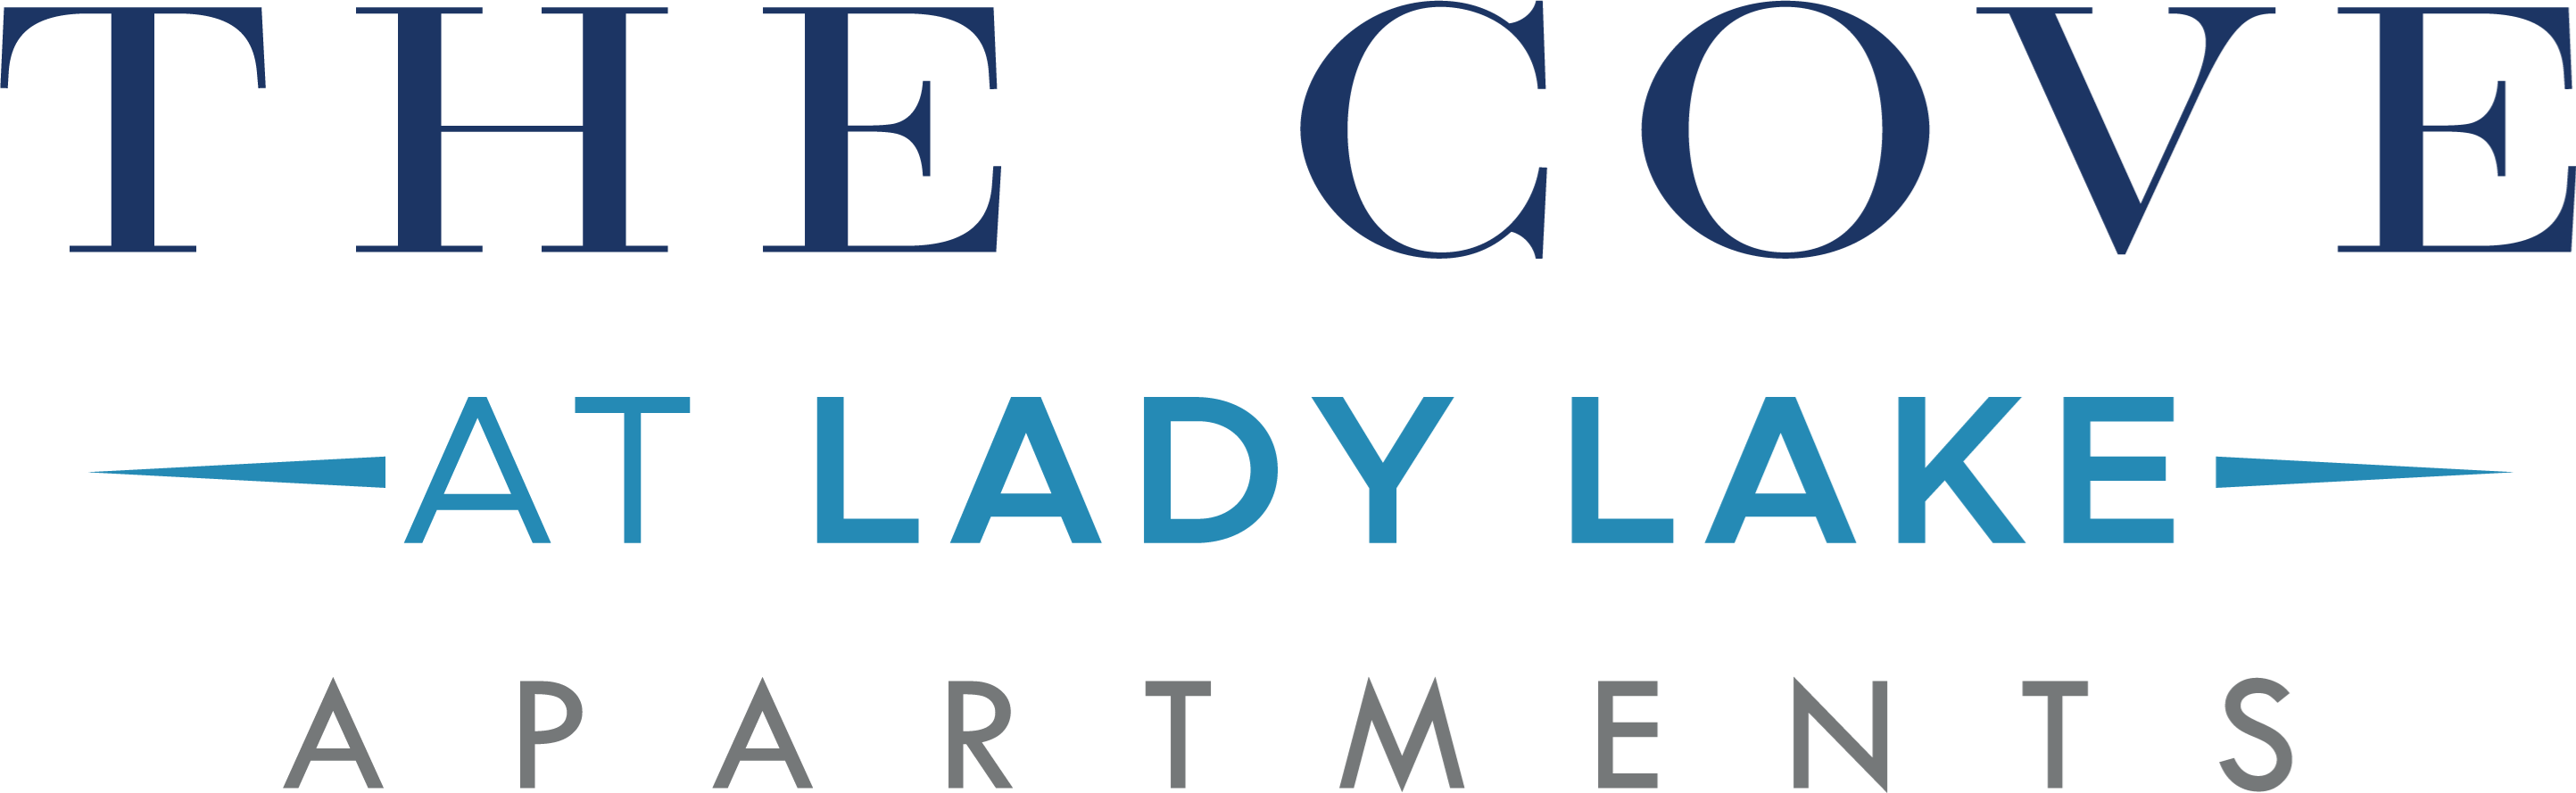 Apartments In Lady Lake Fl Cove At Lady Lake Apartments Concord Rents Concord Management Concordrents Com